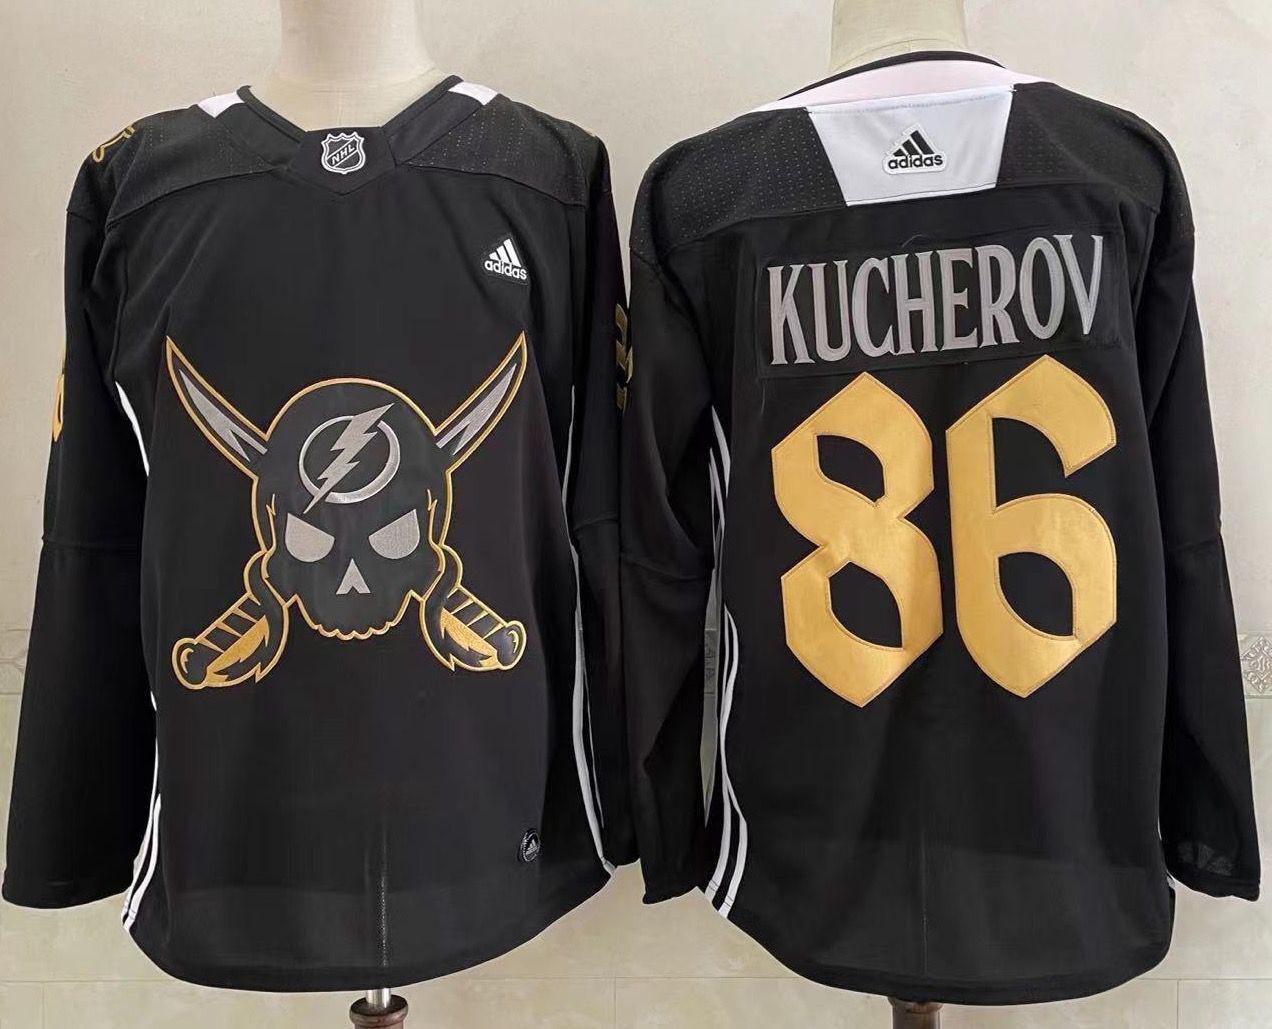 Men's Tampa Bay Lightning #86 Nikita Kucherov Black Pirate Themed Warmup Authentic Jersey